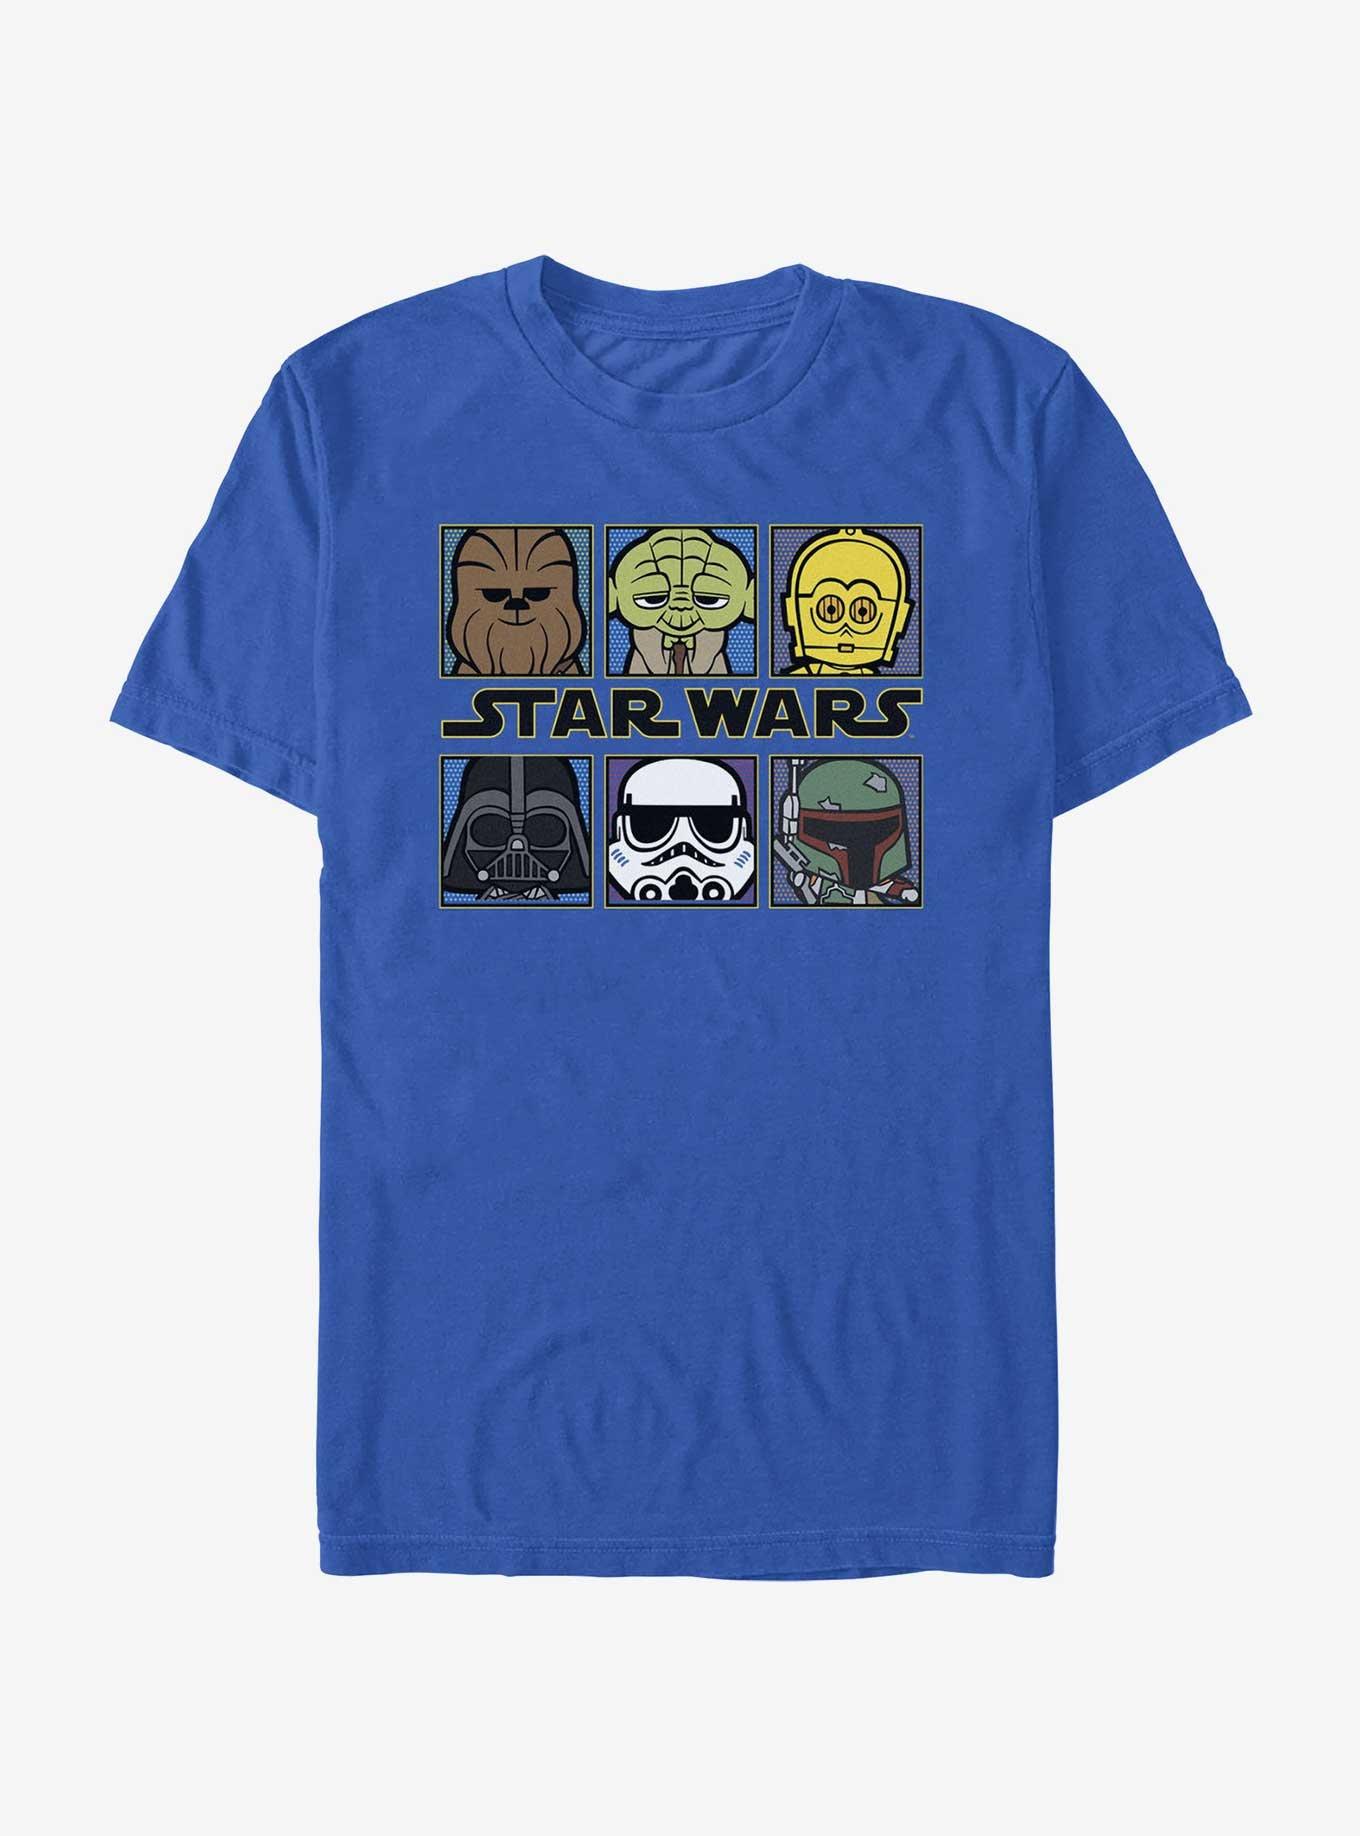 Star Wars Chibi Portraits T-Shirt, ROYAL, hi-res